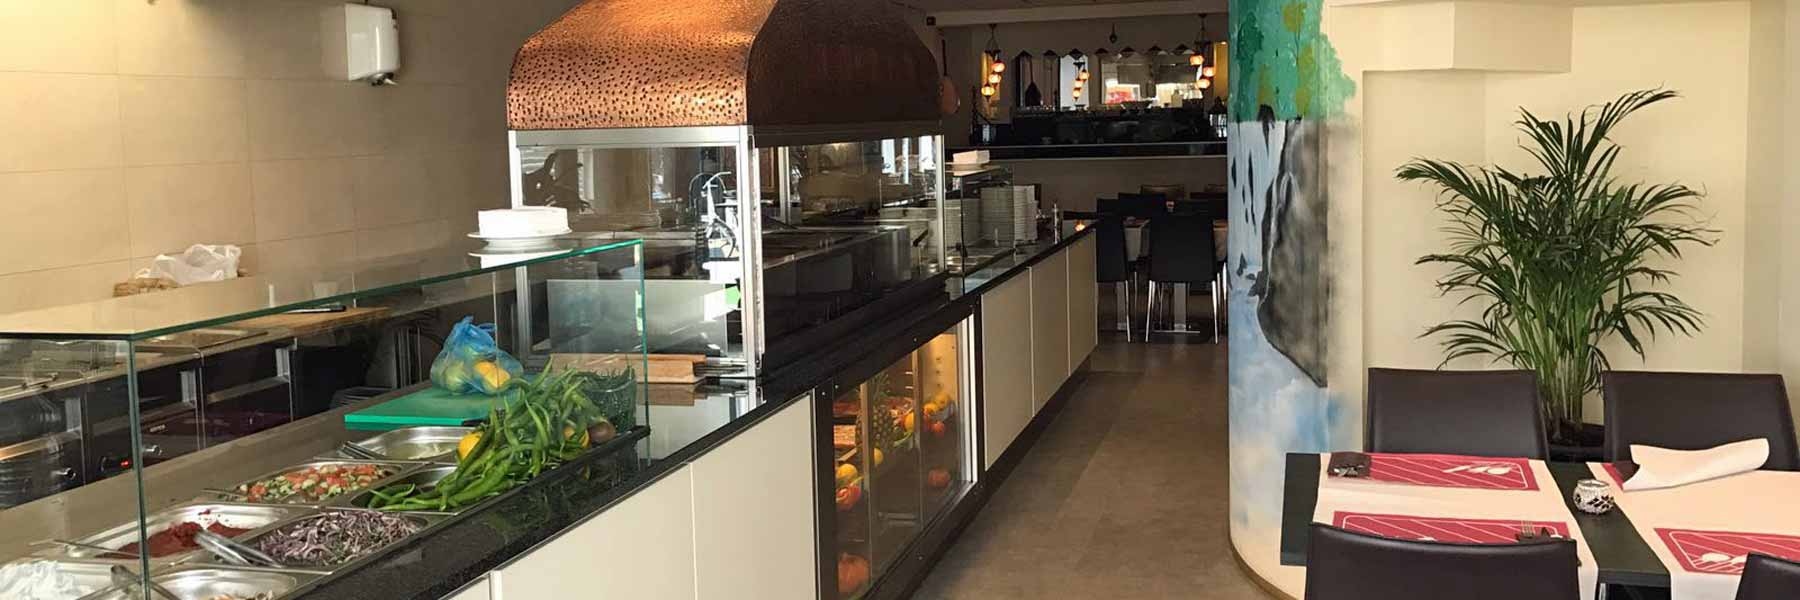 Nieuw! - Diyar Mangal Houtskoolrestaurant